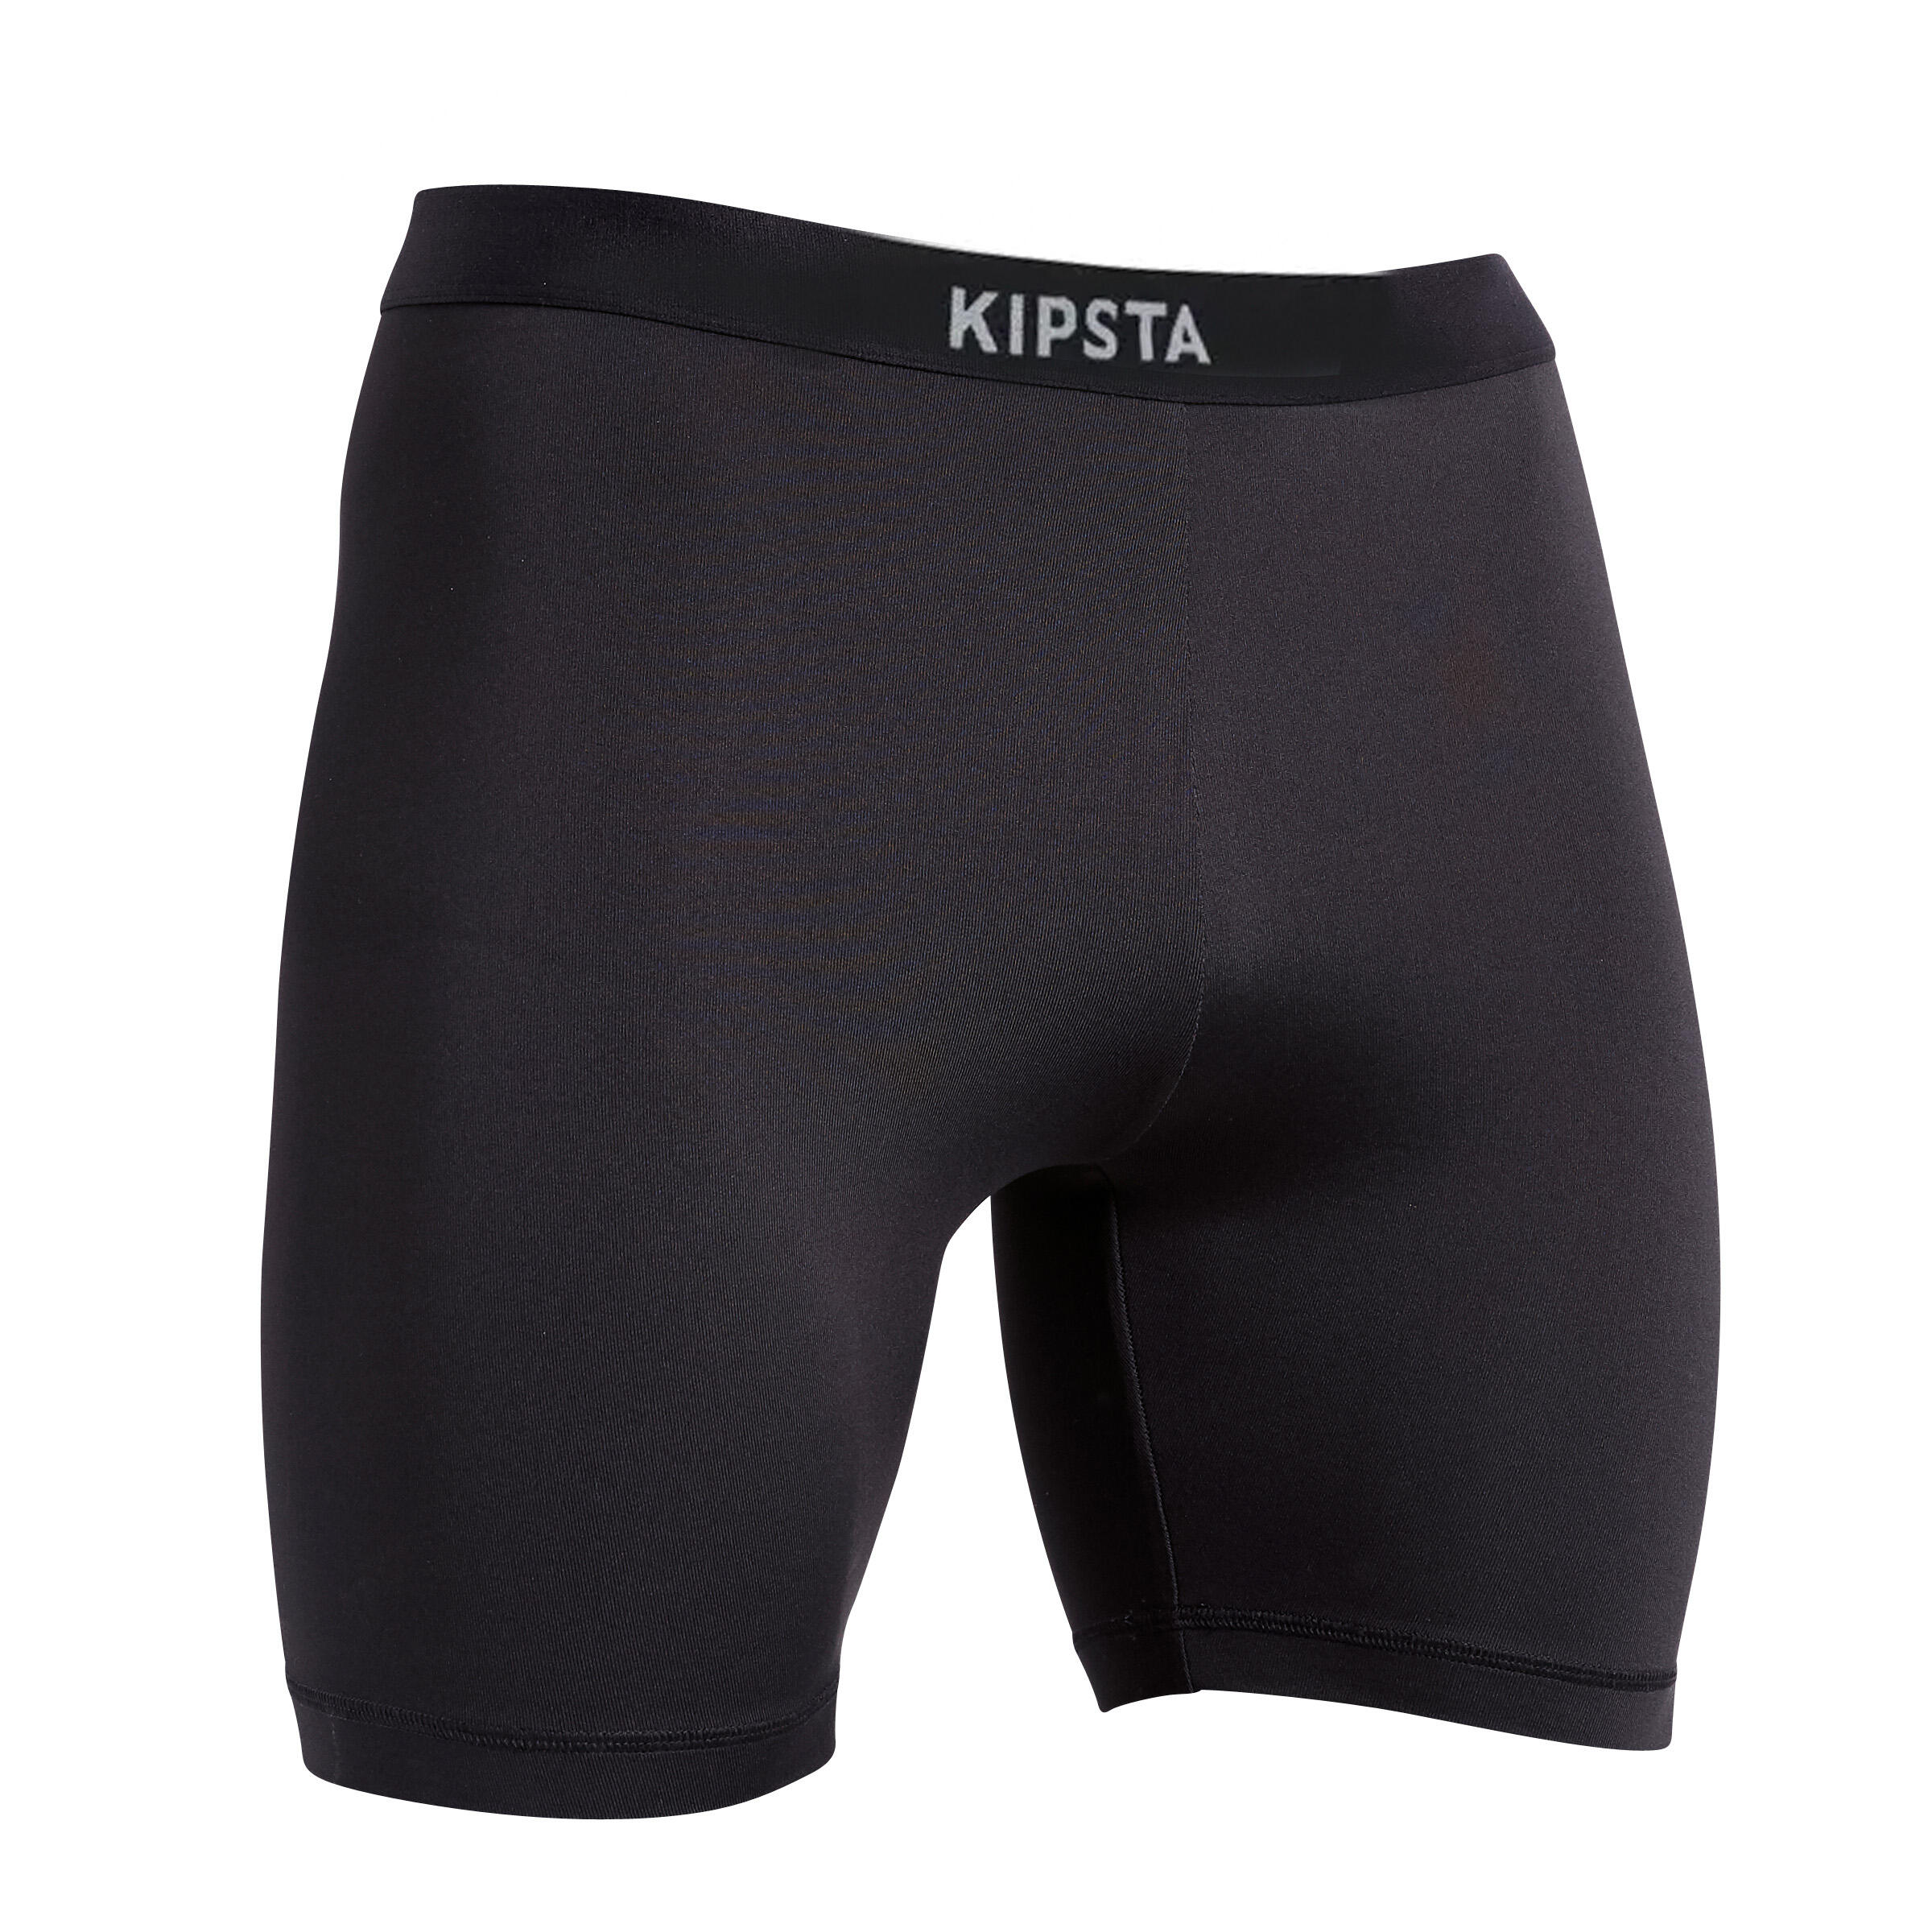 Decathlon | Sotto-pantaloncini termici uomo KEEPCOMFORT 100 neri |  Kipsta